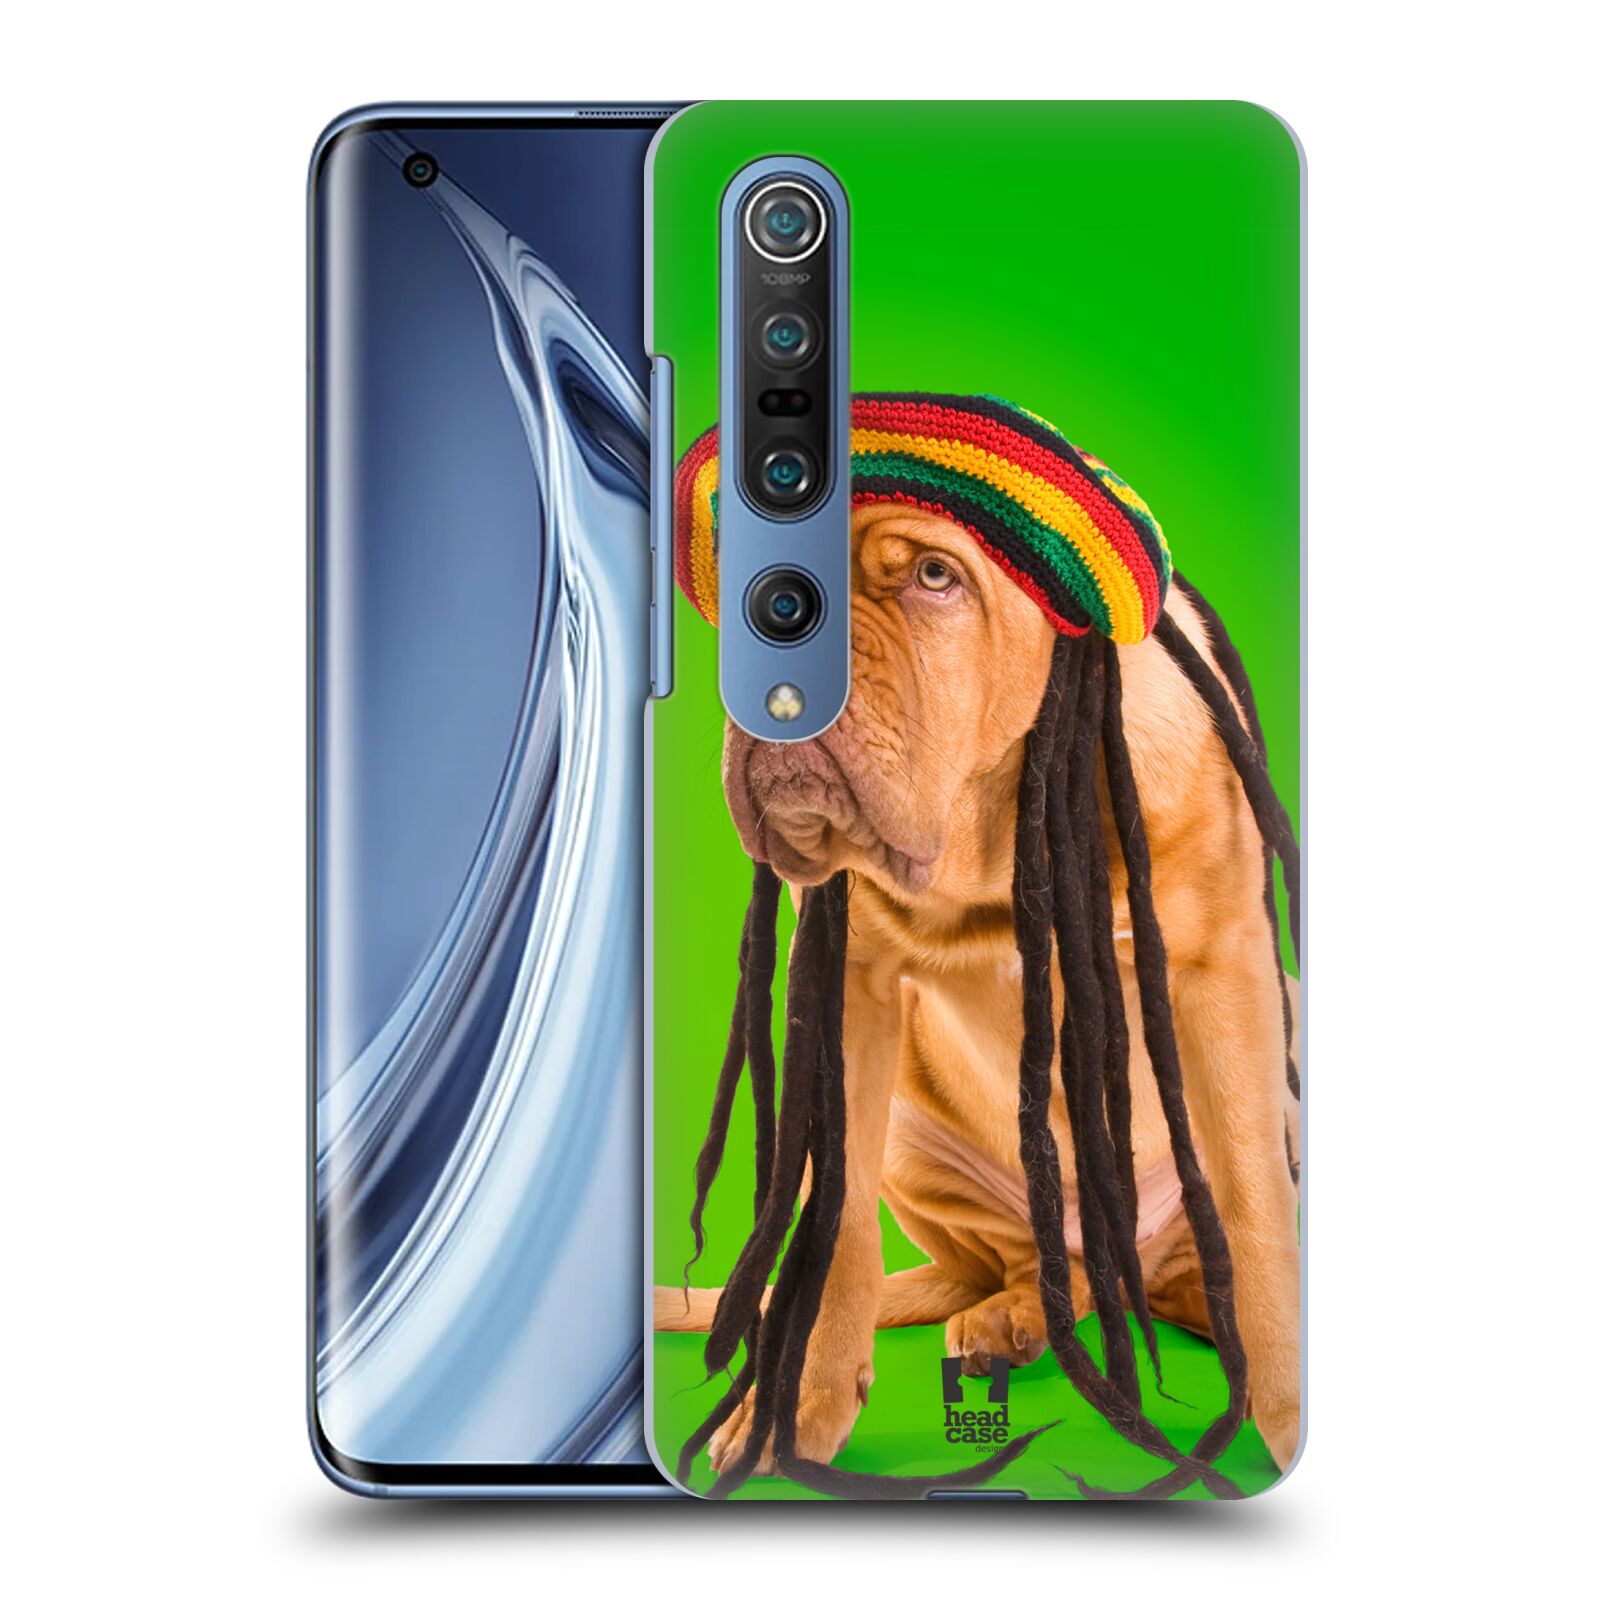 HEAD CASE plastový obal na mobil Xiaomi Mi 10 vzor Legrační zvířátka pejsek dredy Rastafarián